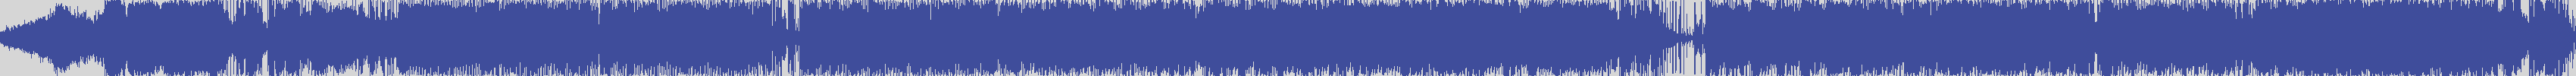 vitti_records [VIT010] Ratek - Funktion Two [Original Mix] audio wave form